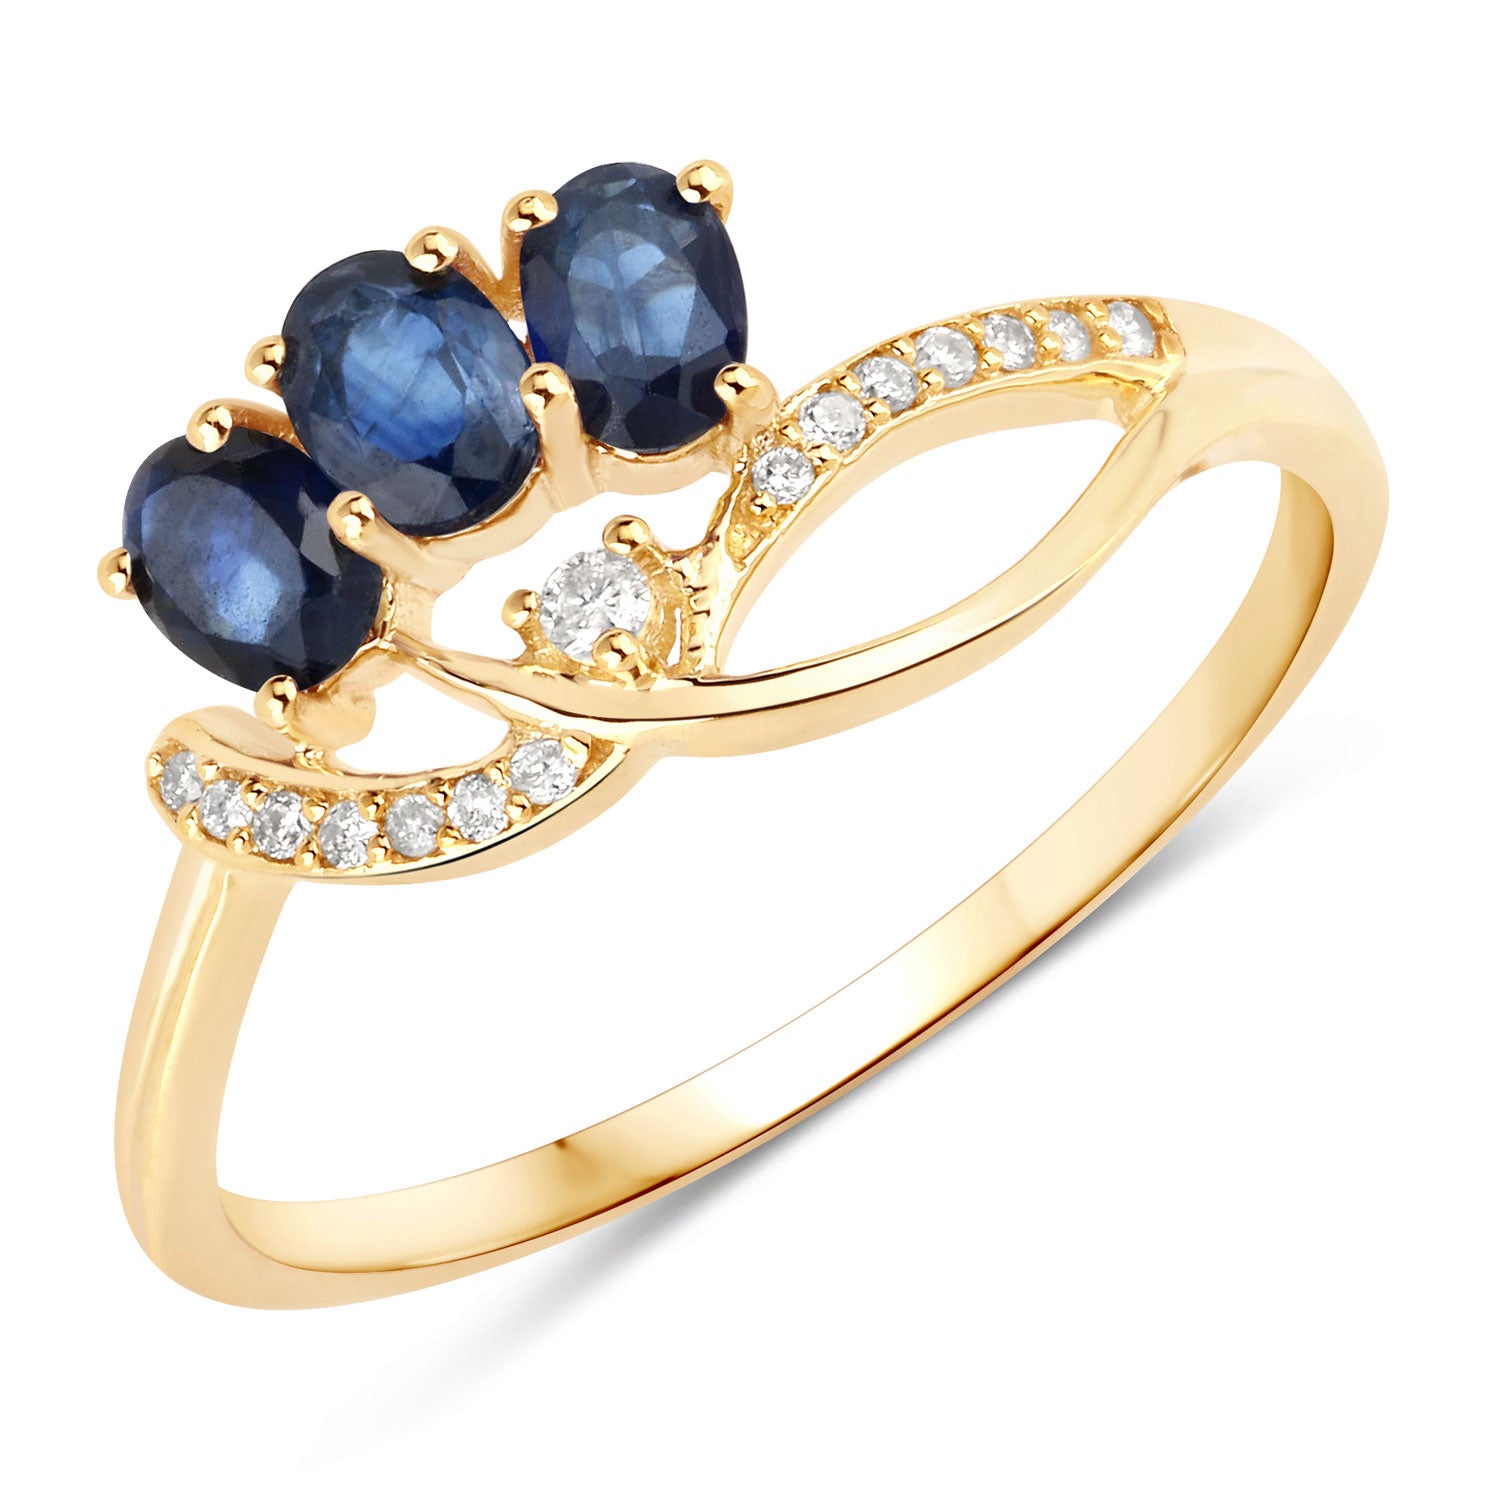 0.65 Carat Genuine Blue Sapphire and White Diamond 14K Yellow Gold Ring